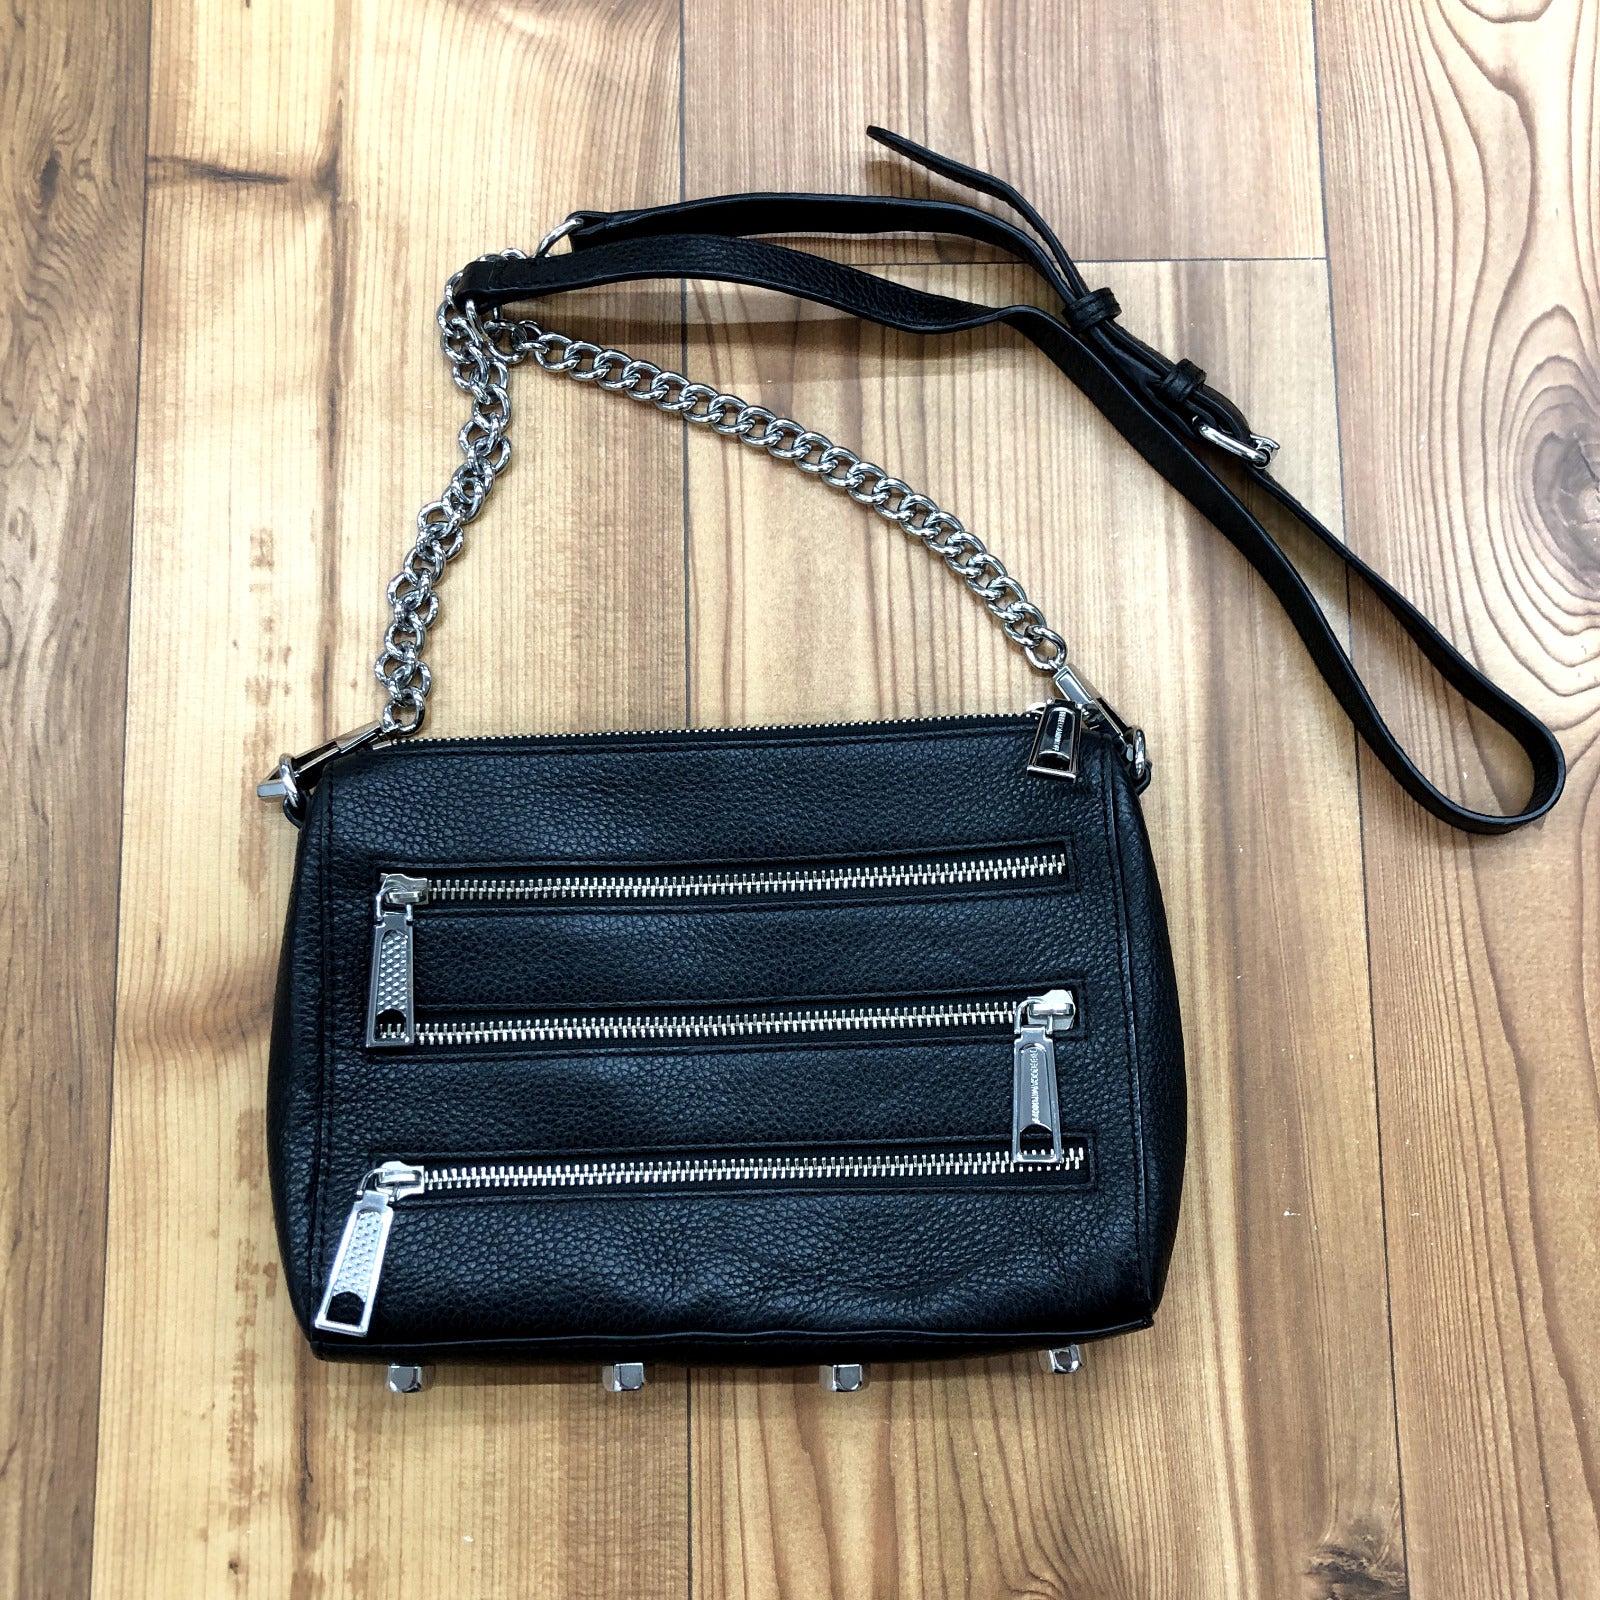 Rebecca Minkoff Black Leather Triple Zipper Rocker Crossbody Handbag 7"x10"x2"